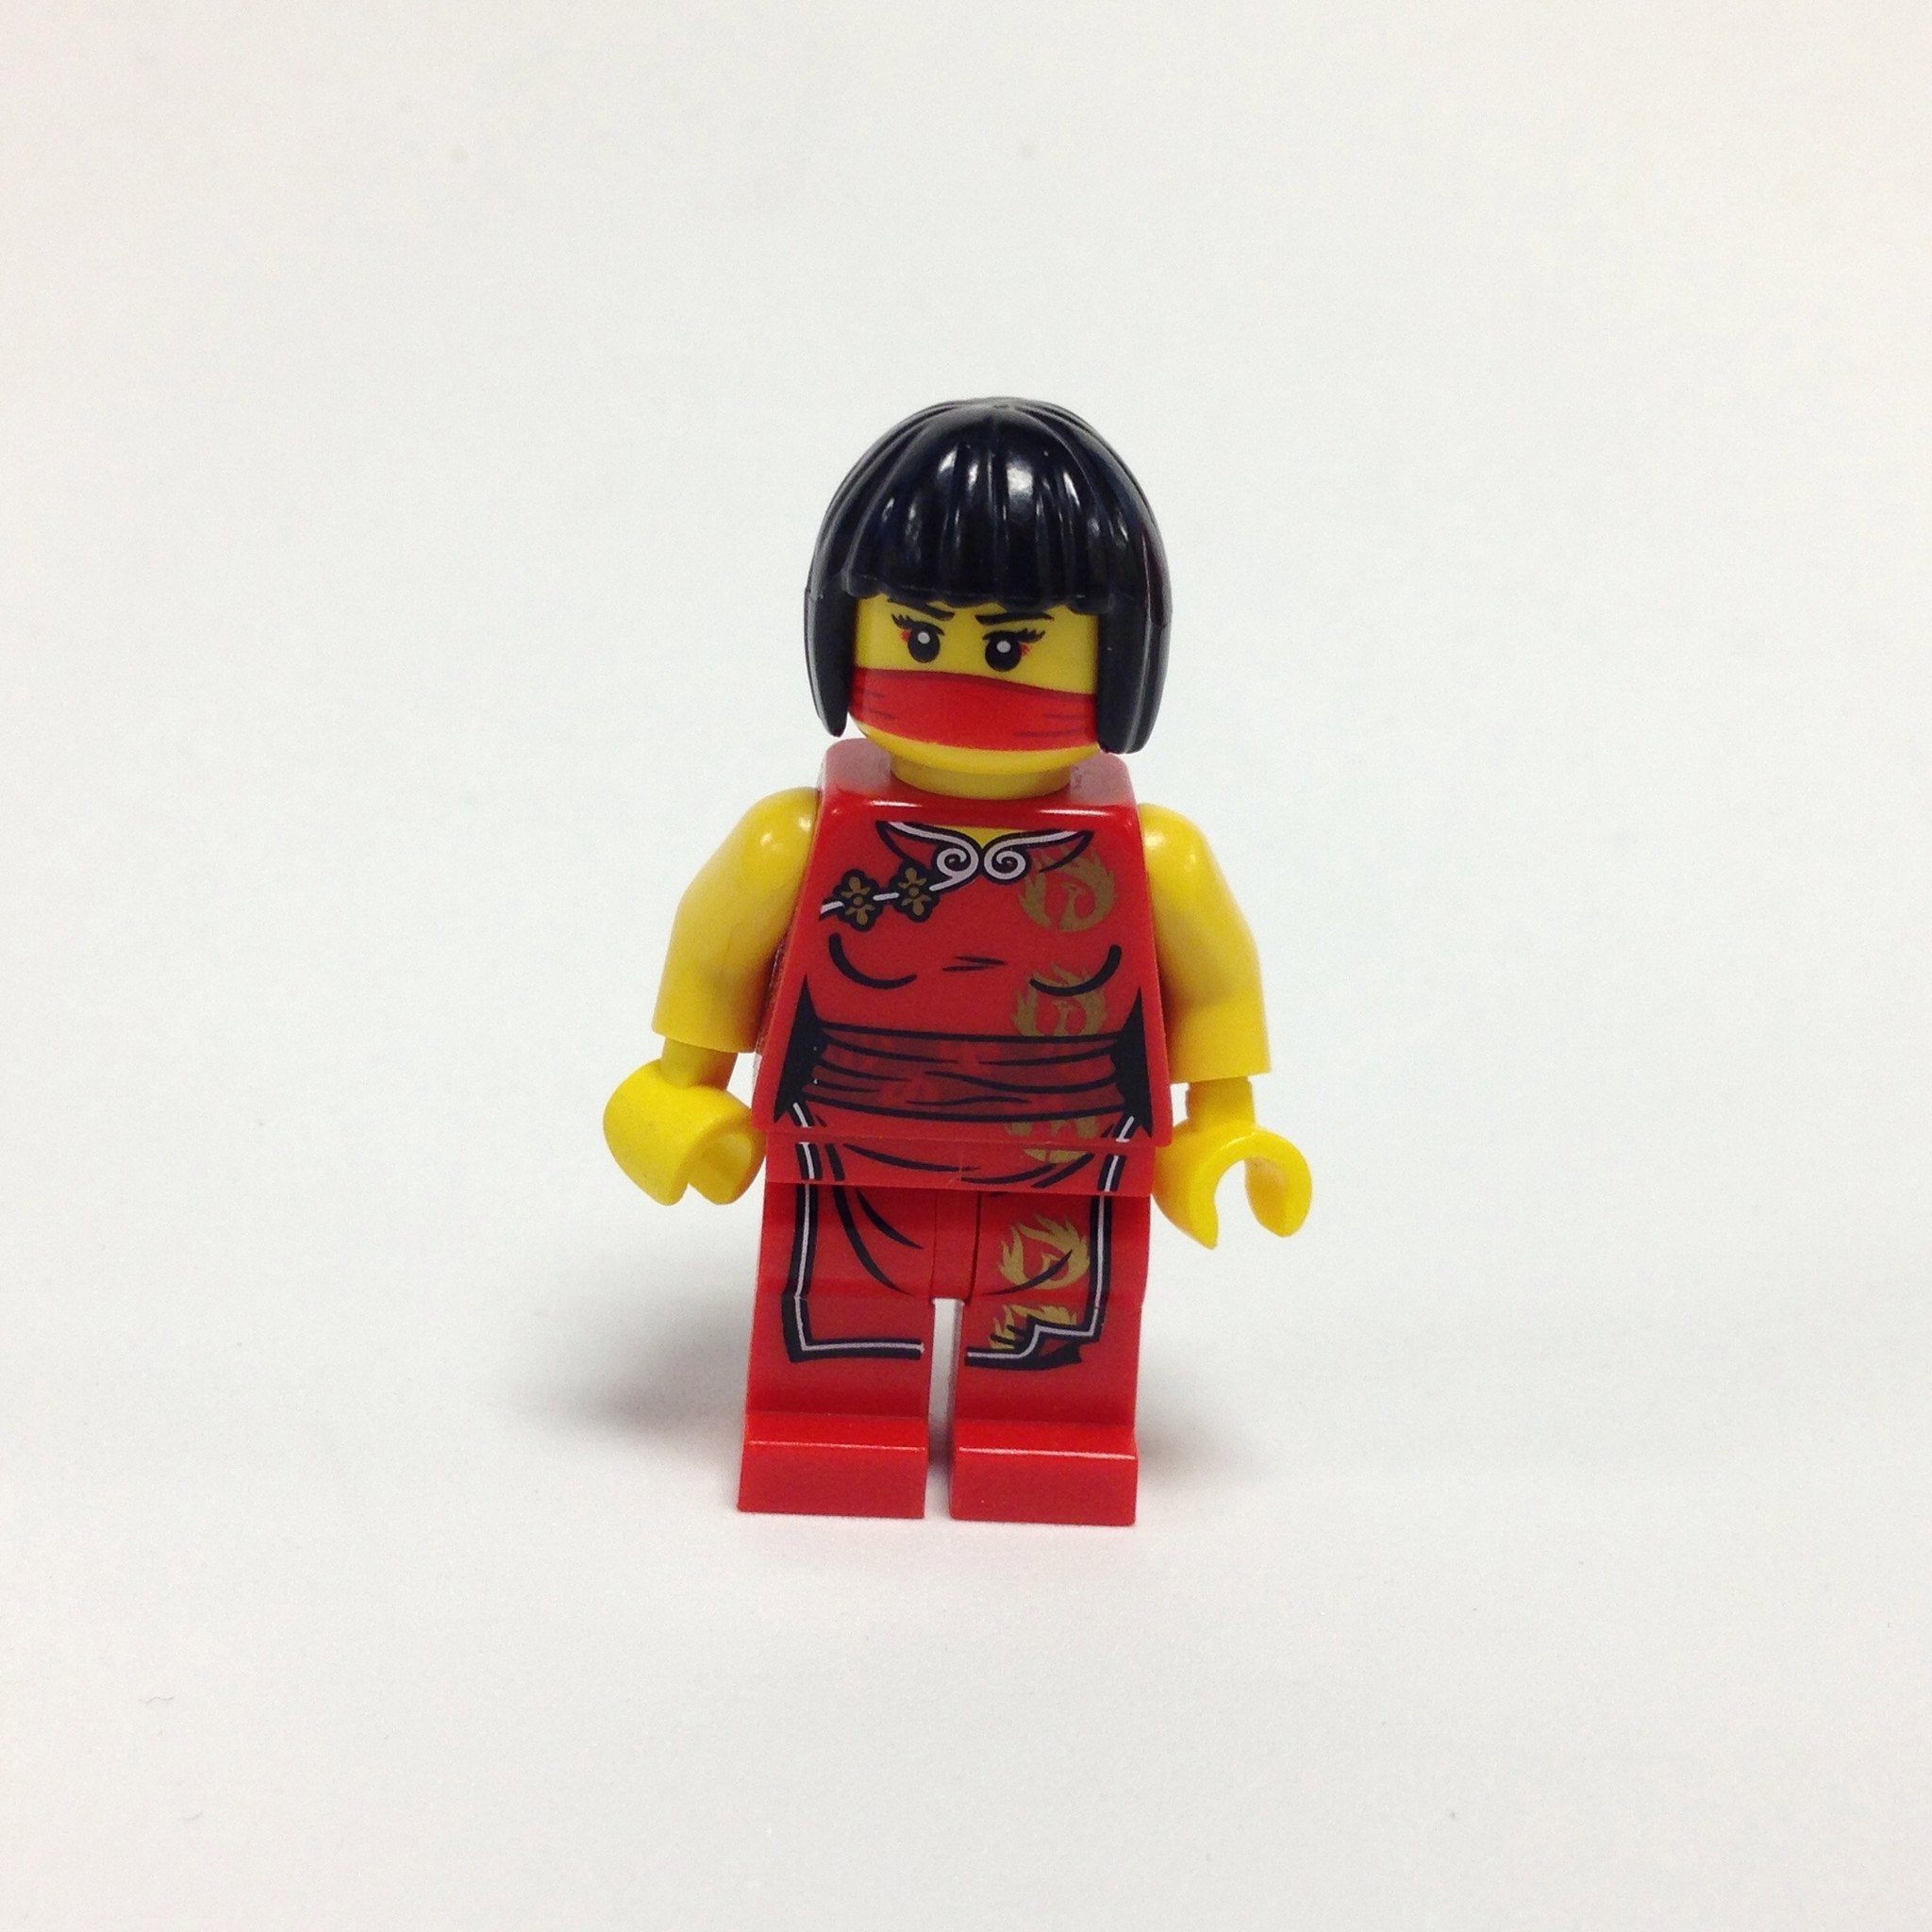 Relativ størrelse vene Langt væk Nya, LEGO Minifigures, Ninjago – Creative Brick Builders